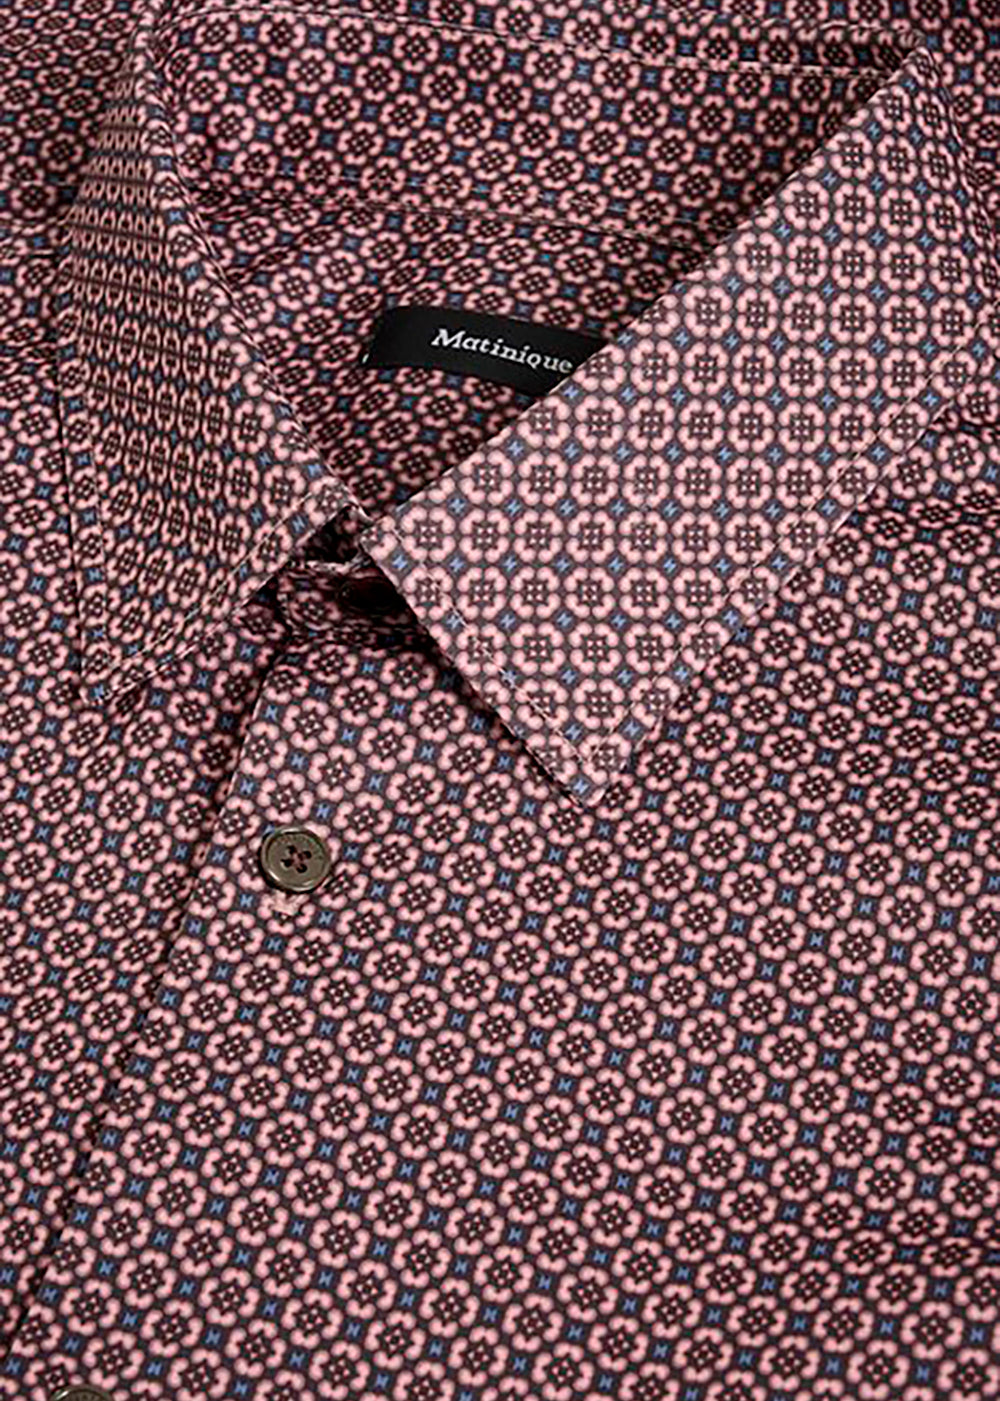 Trostol Short Sleeve Shirt - Faded Rose - Matinique Canada - Danali